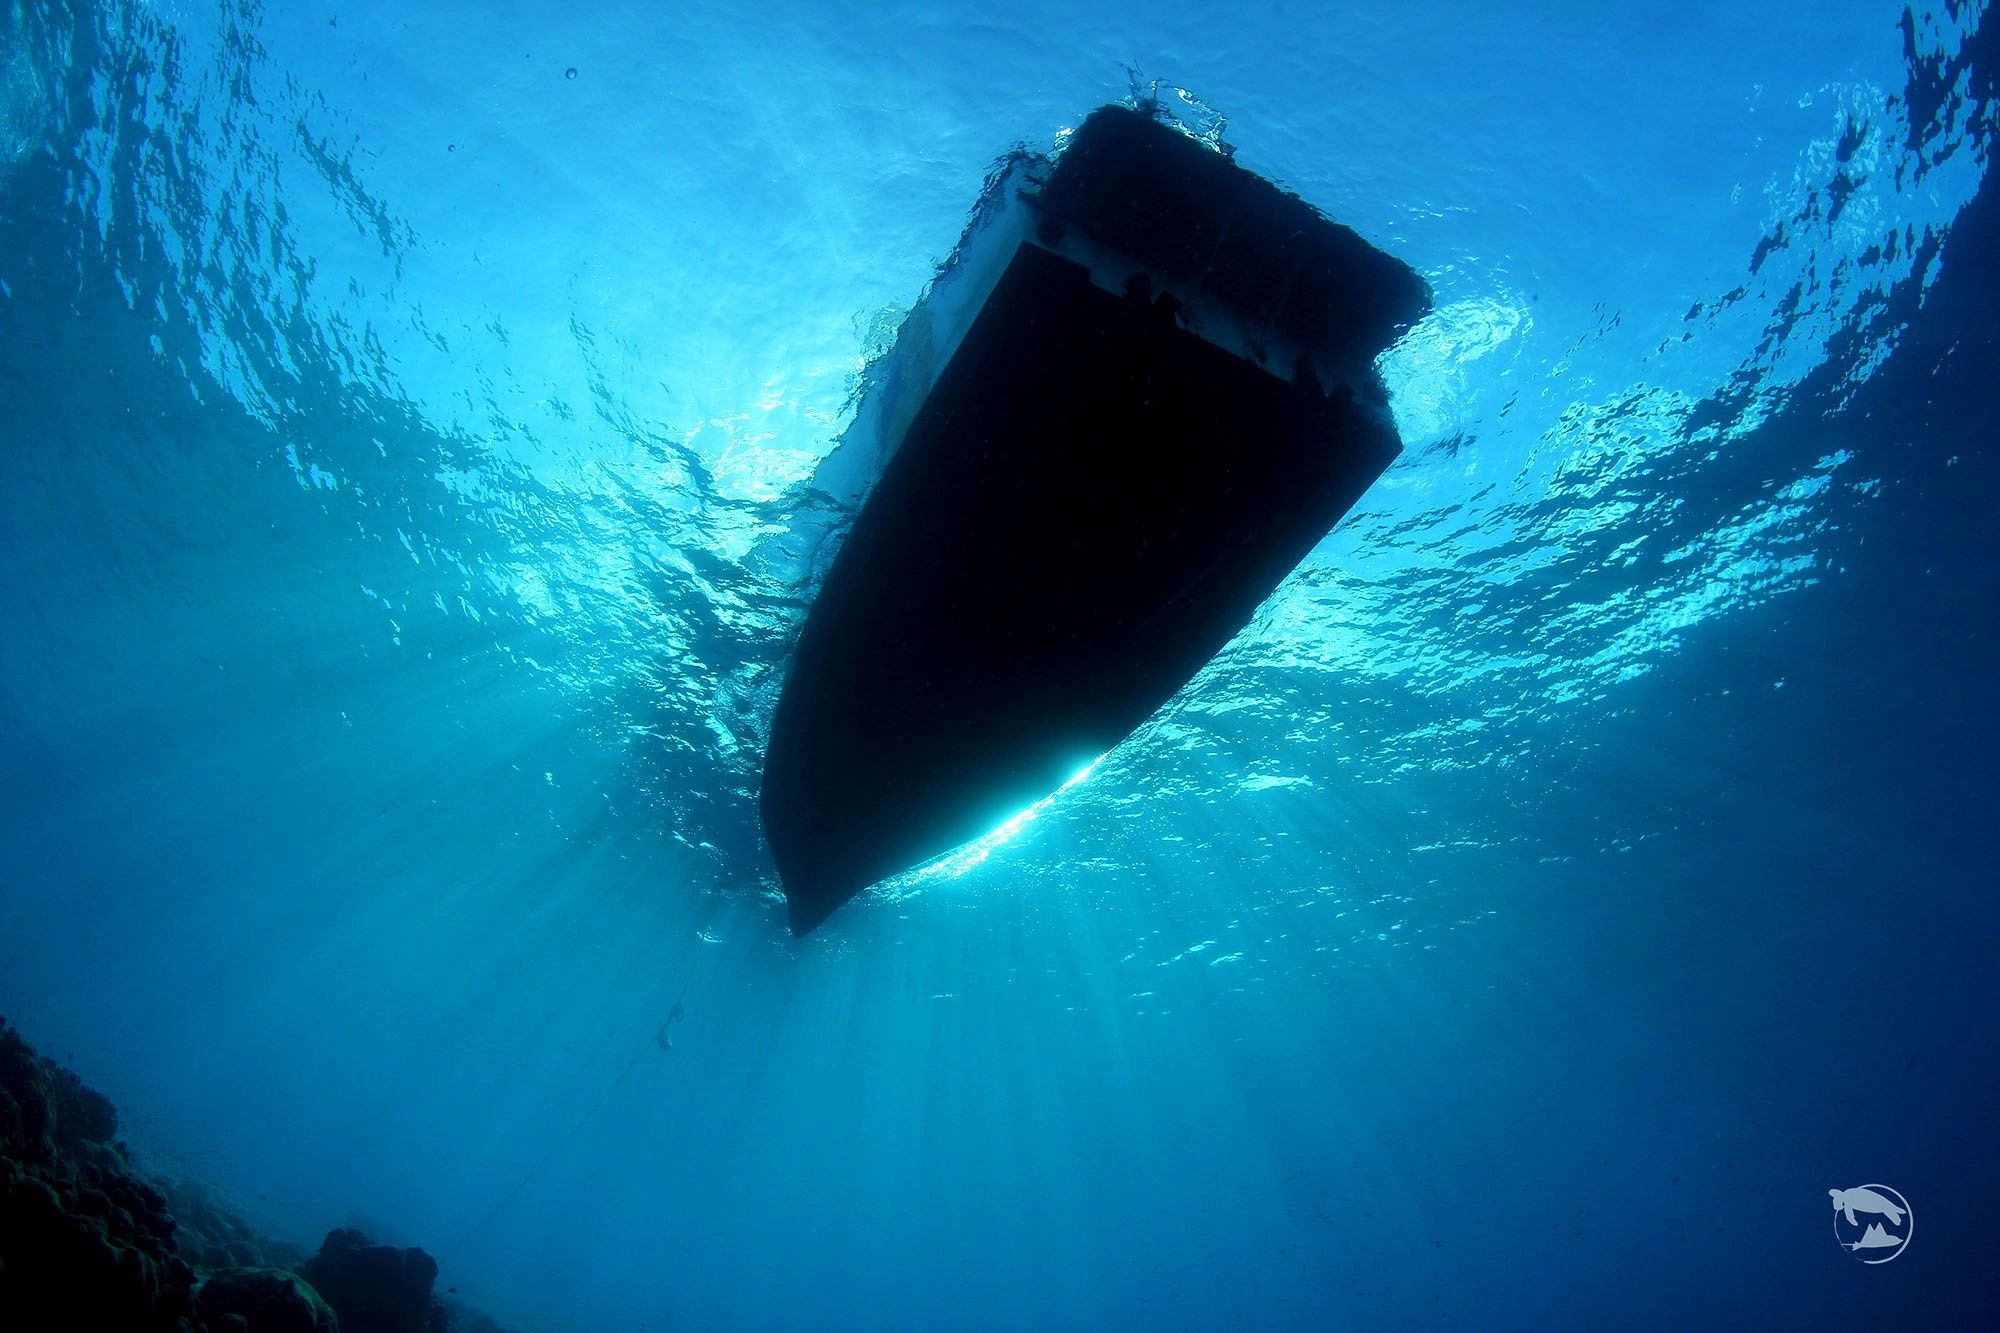 Into the water below. Underwater Boat. Underwater ship. Under Water. Ship bottom.